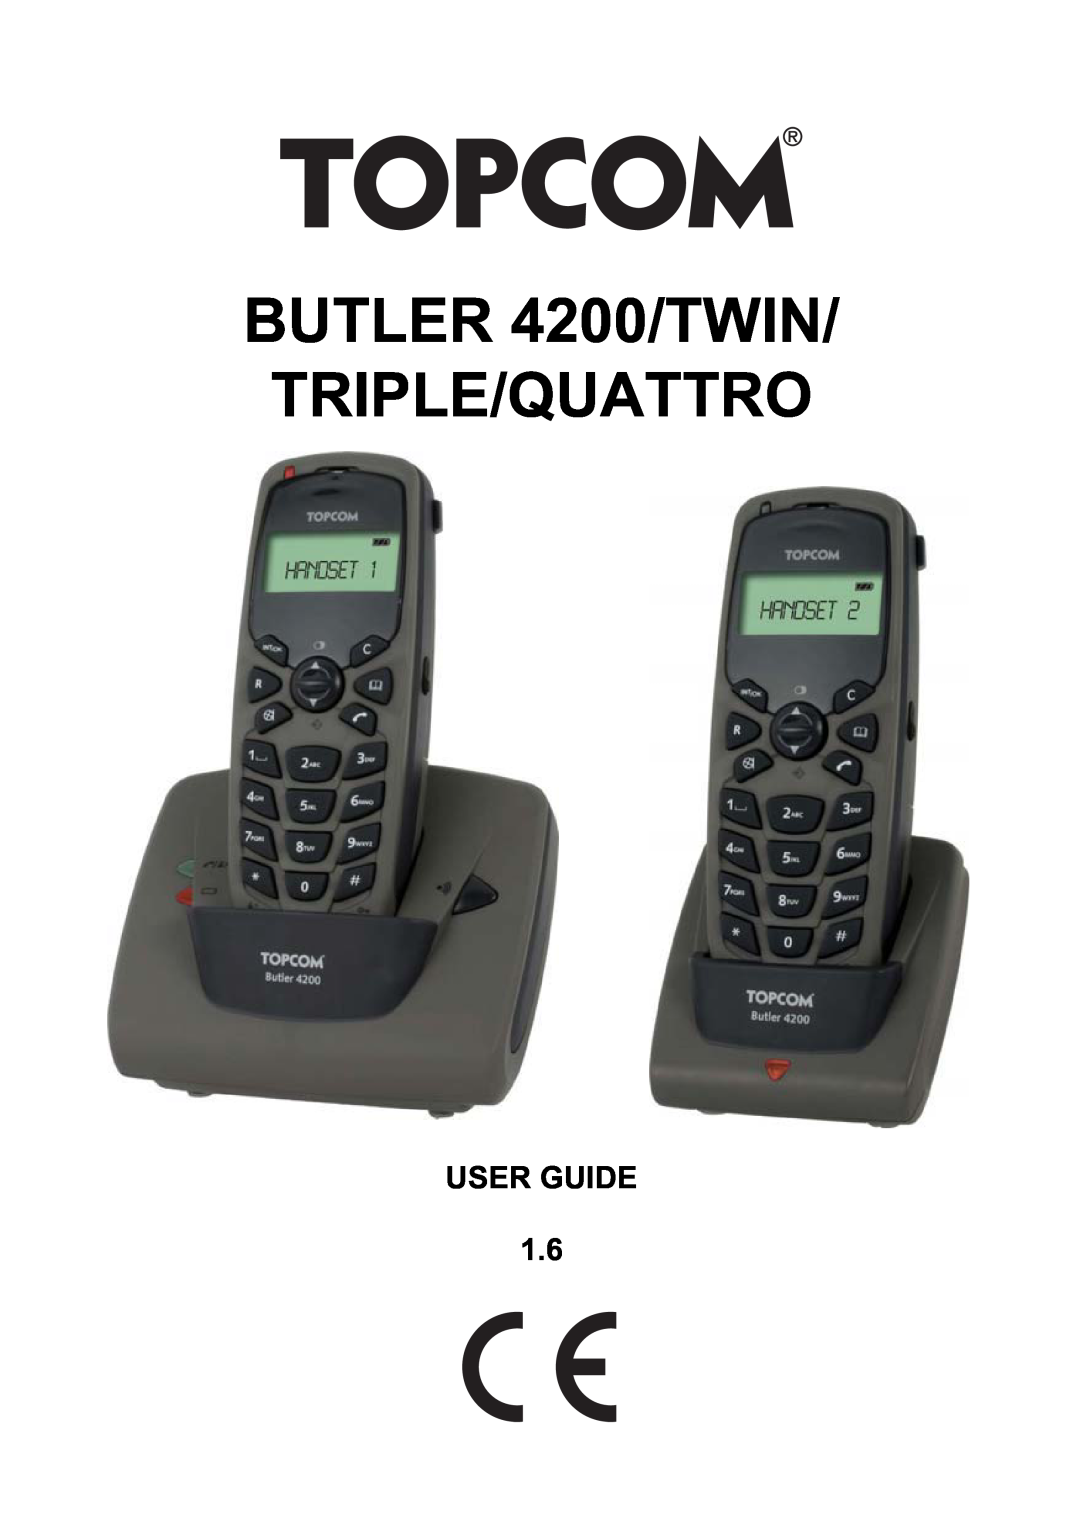 Topcom manual User Guide, BUTLER 4200/TWIN TRIPLE/QUATTRO 